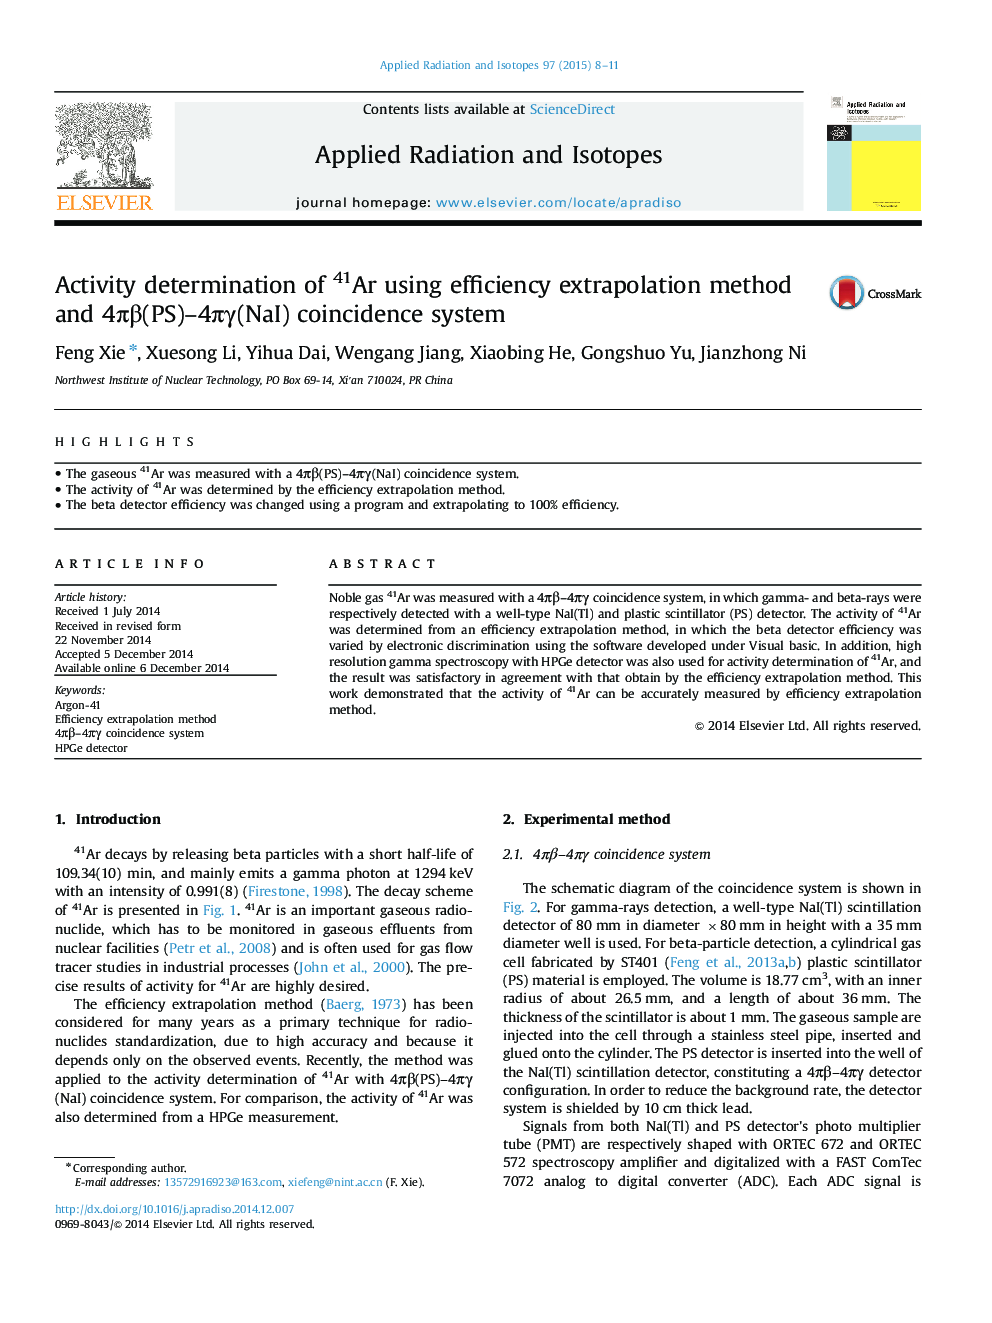 Activity determination of 41Ar using efficiency extrapolation method and 4ÏÎ²(PS)-4ÏÎ³(NaI) coincidence system